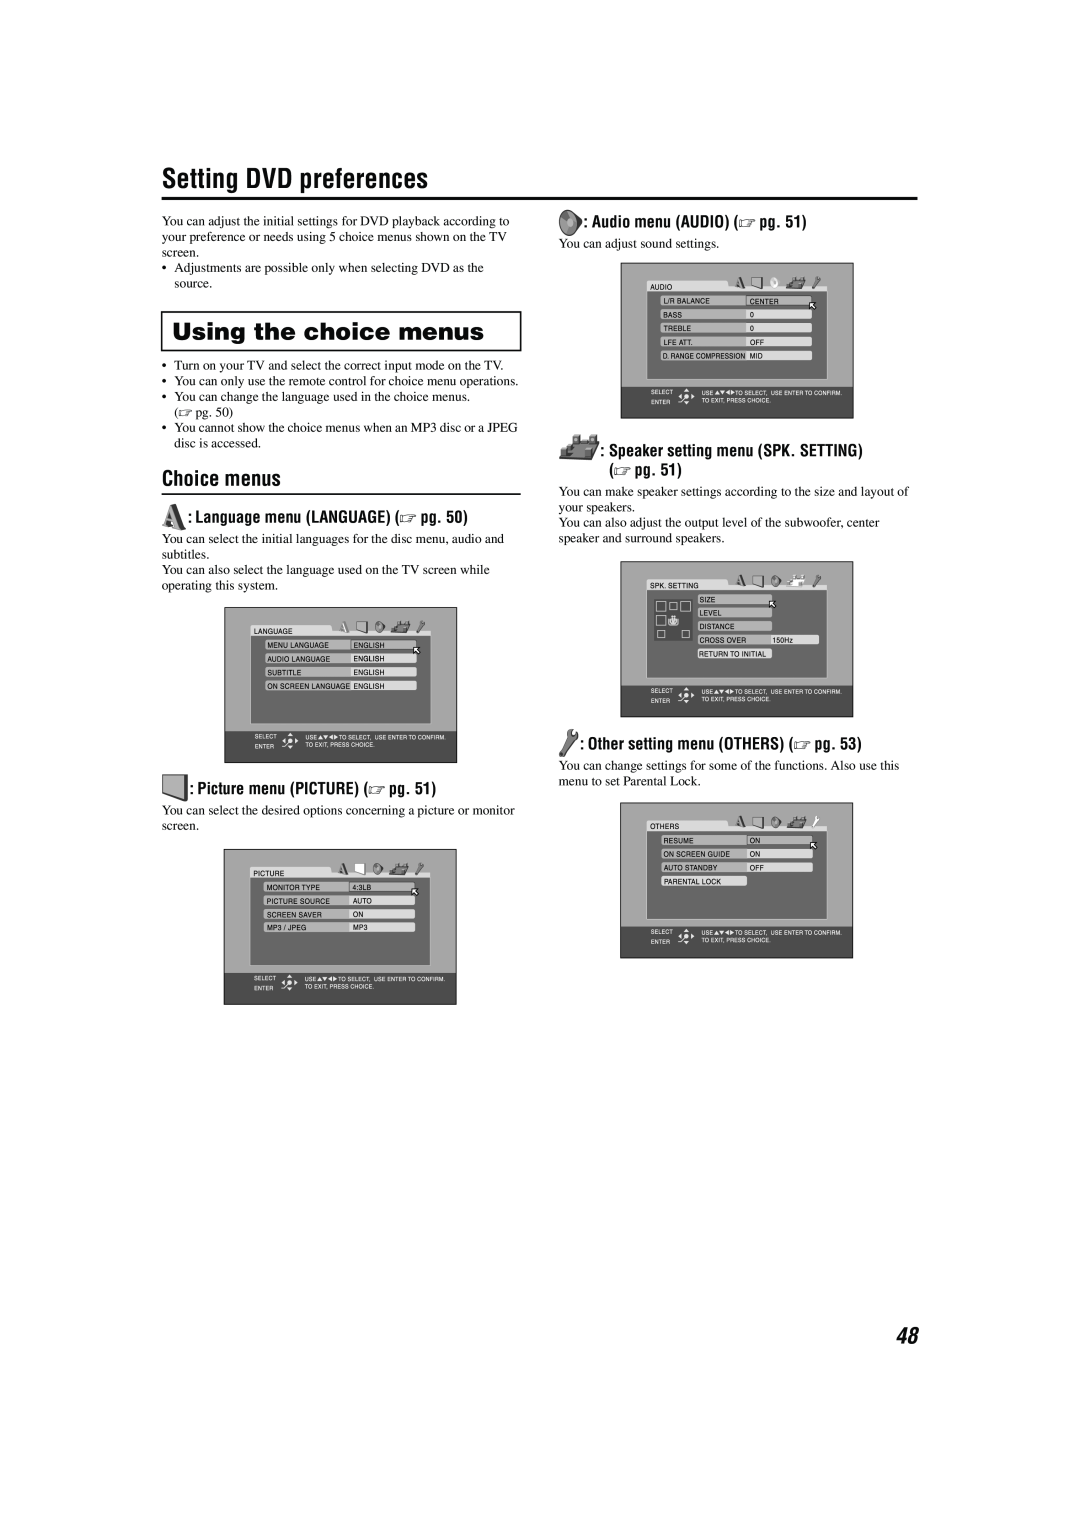 JVC M45 Setting DVD preferences, Using the choice menus, Choice menus, Language menu LANGUAGE A pg, Audio menu AUDIO A pg 